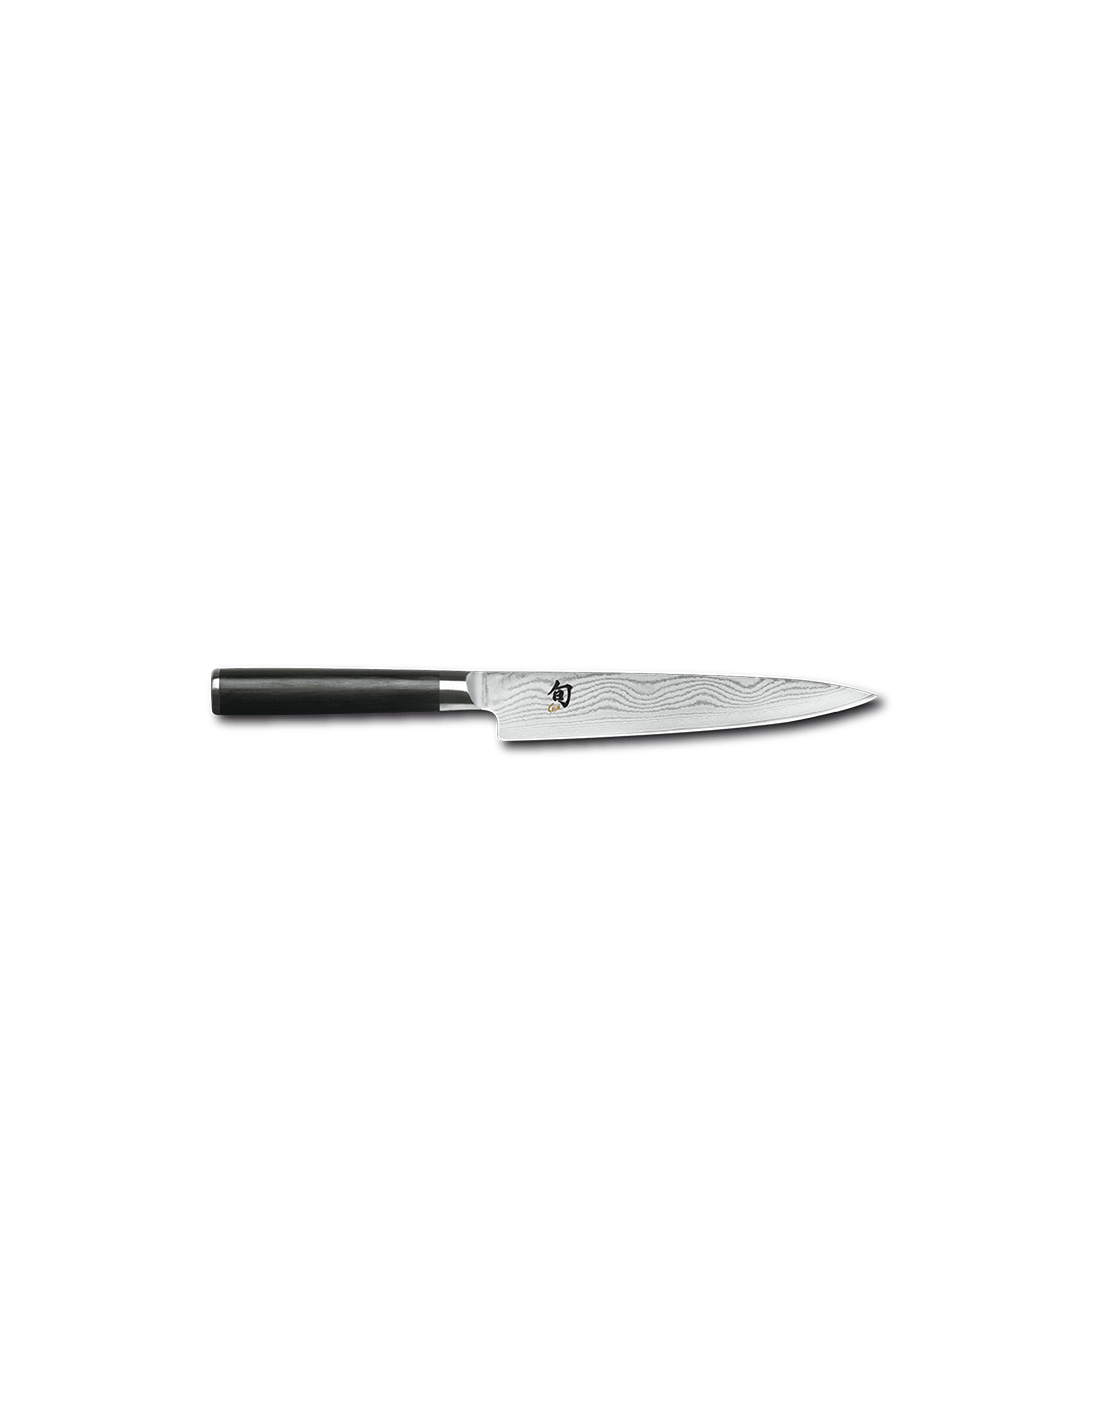 KAI Shun Damasco DM-0735 - Cuchillo jamonero japonés de 30,5 cm